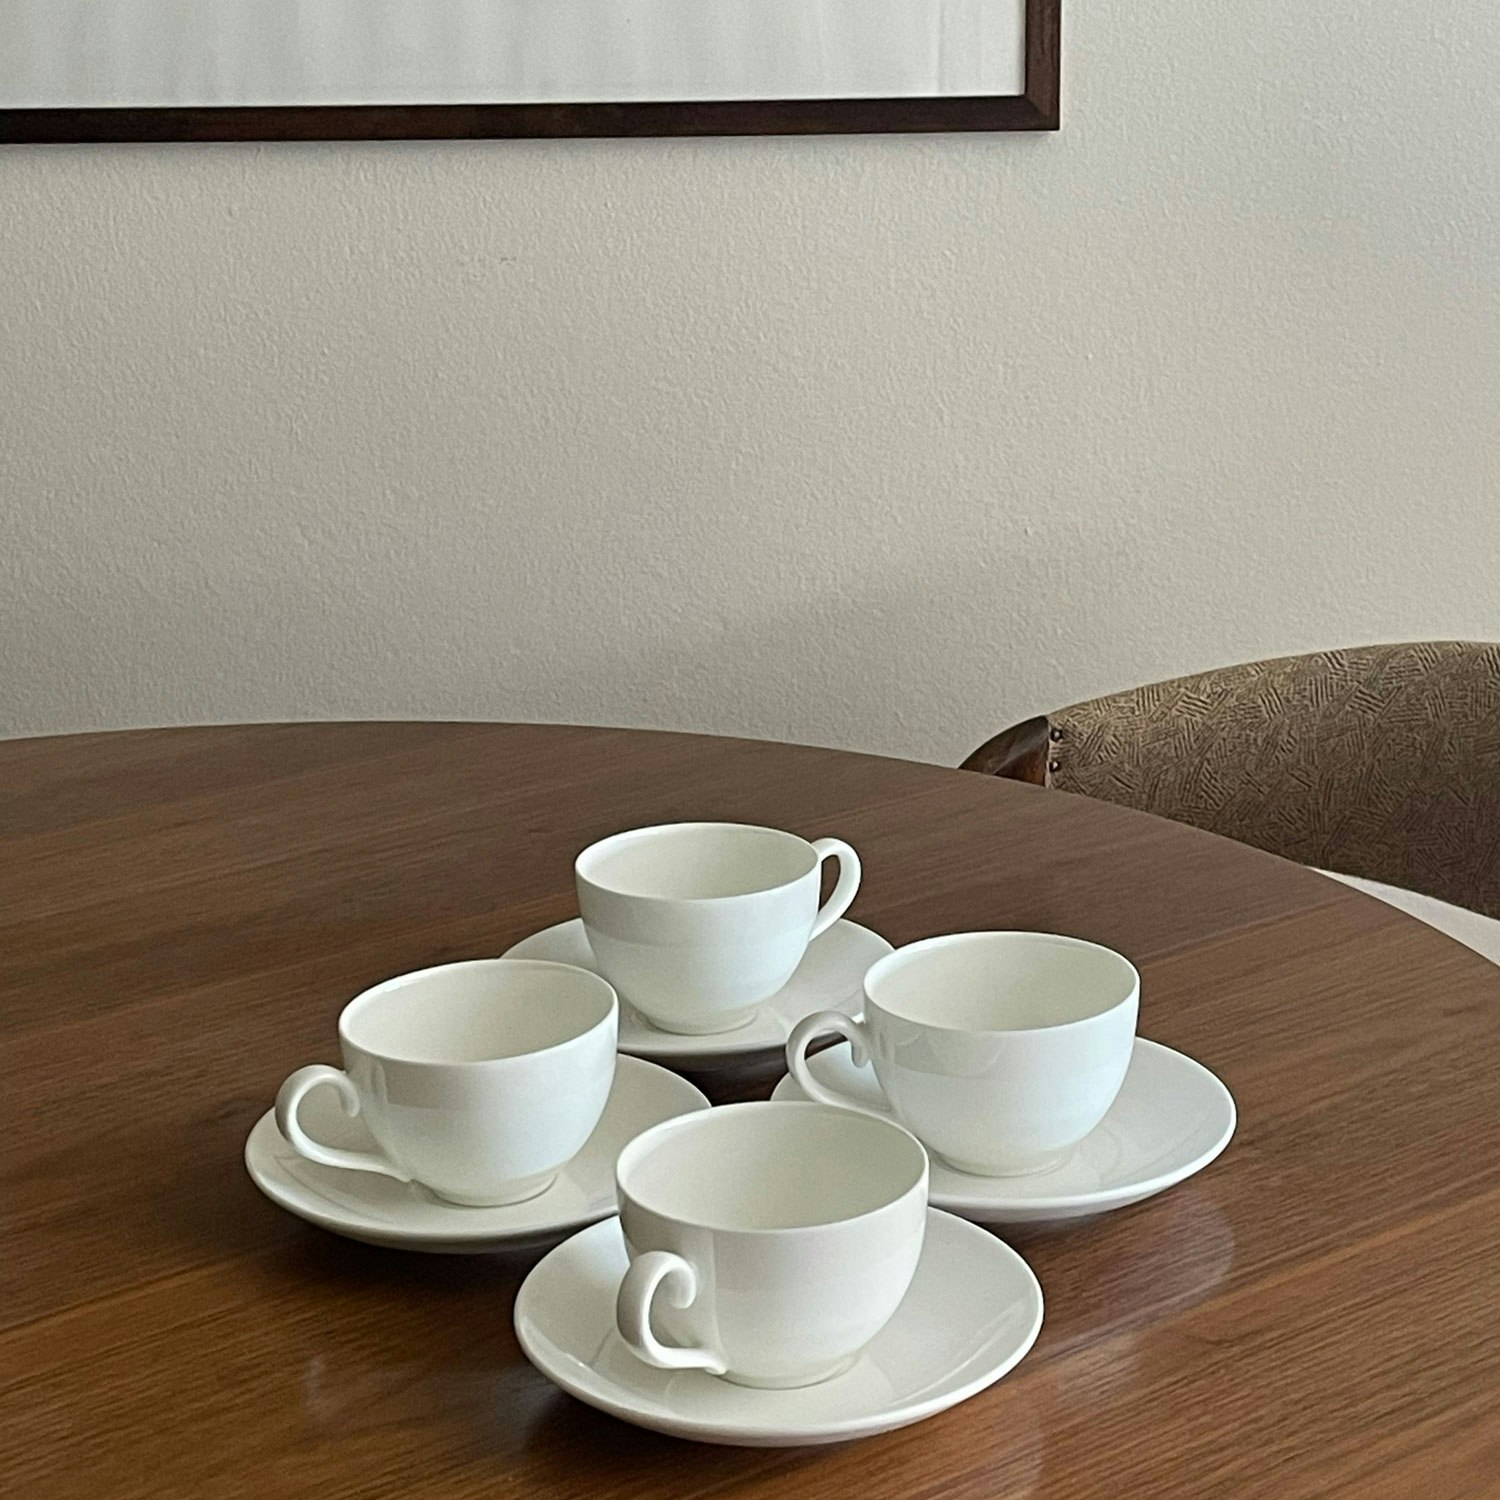 https://royaldesign.com/image/2/villeroy-boch-royal-white-coffee-cup-saucer-7